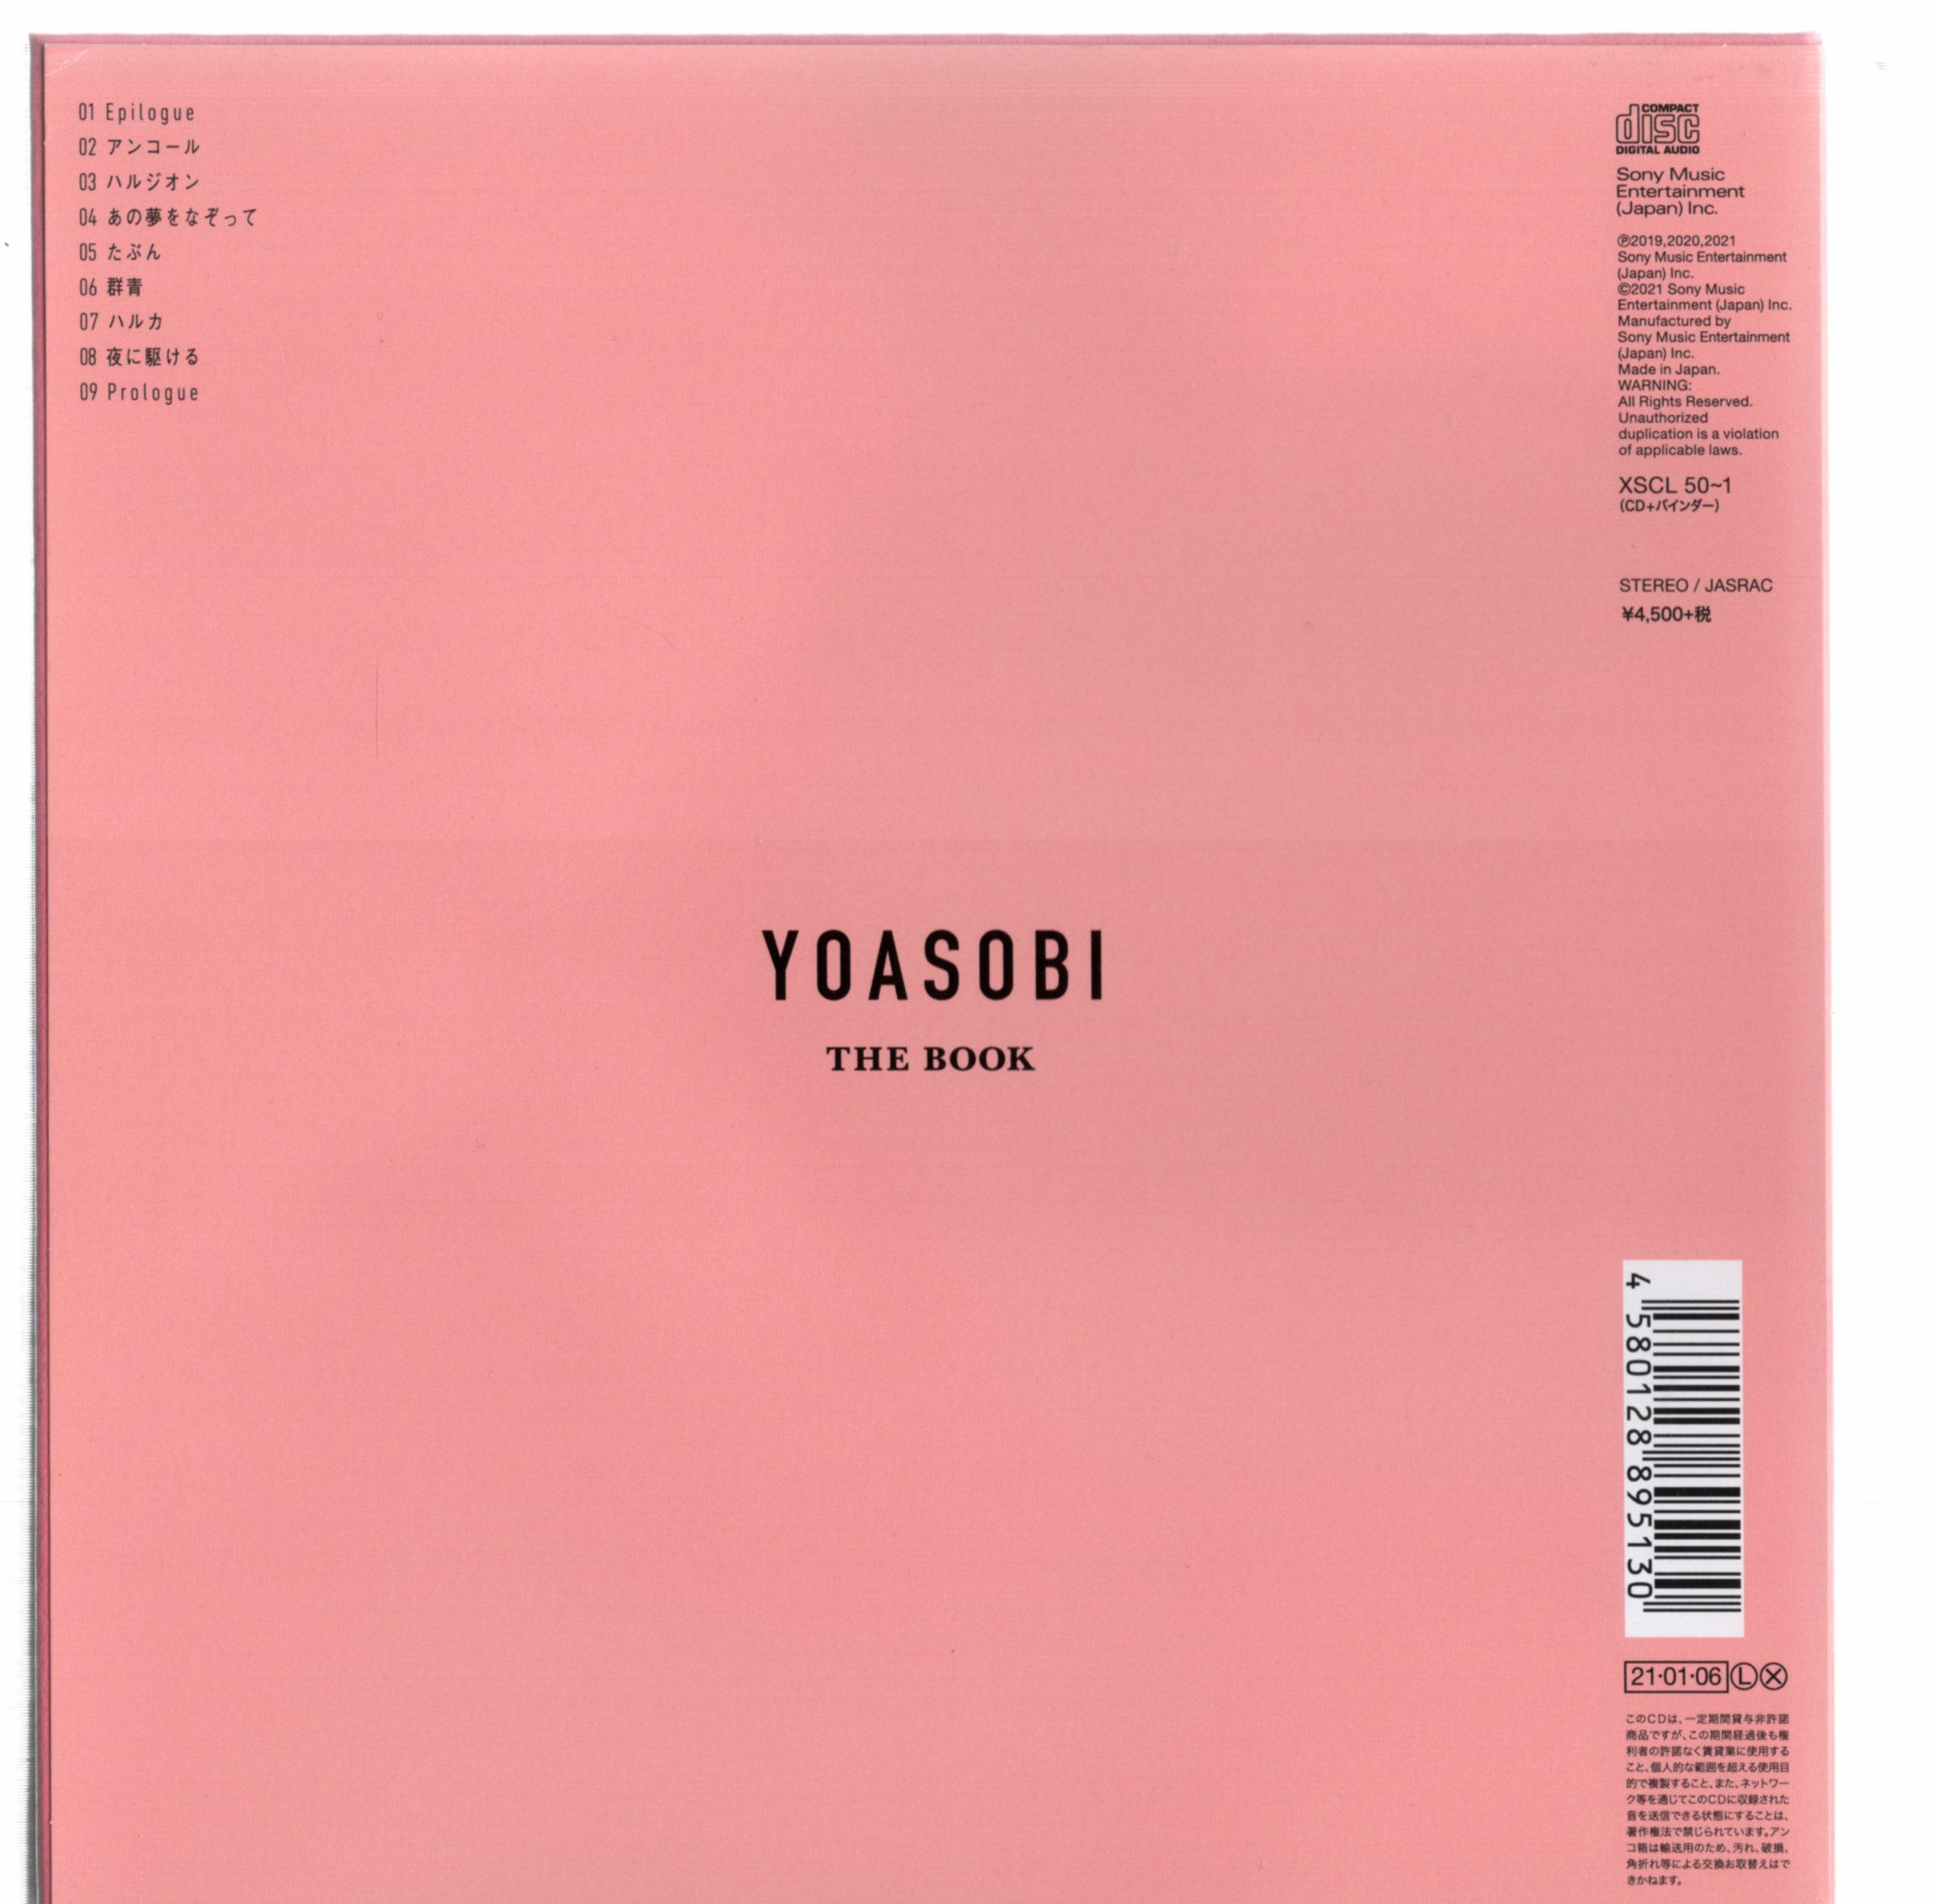 YOASOBI THE BOOK Sony Music Shop ハルカ 特典付ポップス/ロック(邦楽)